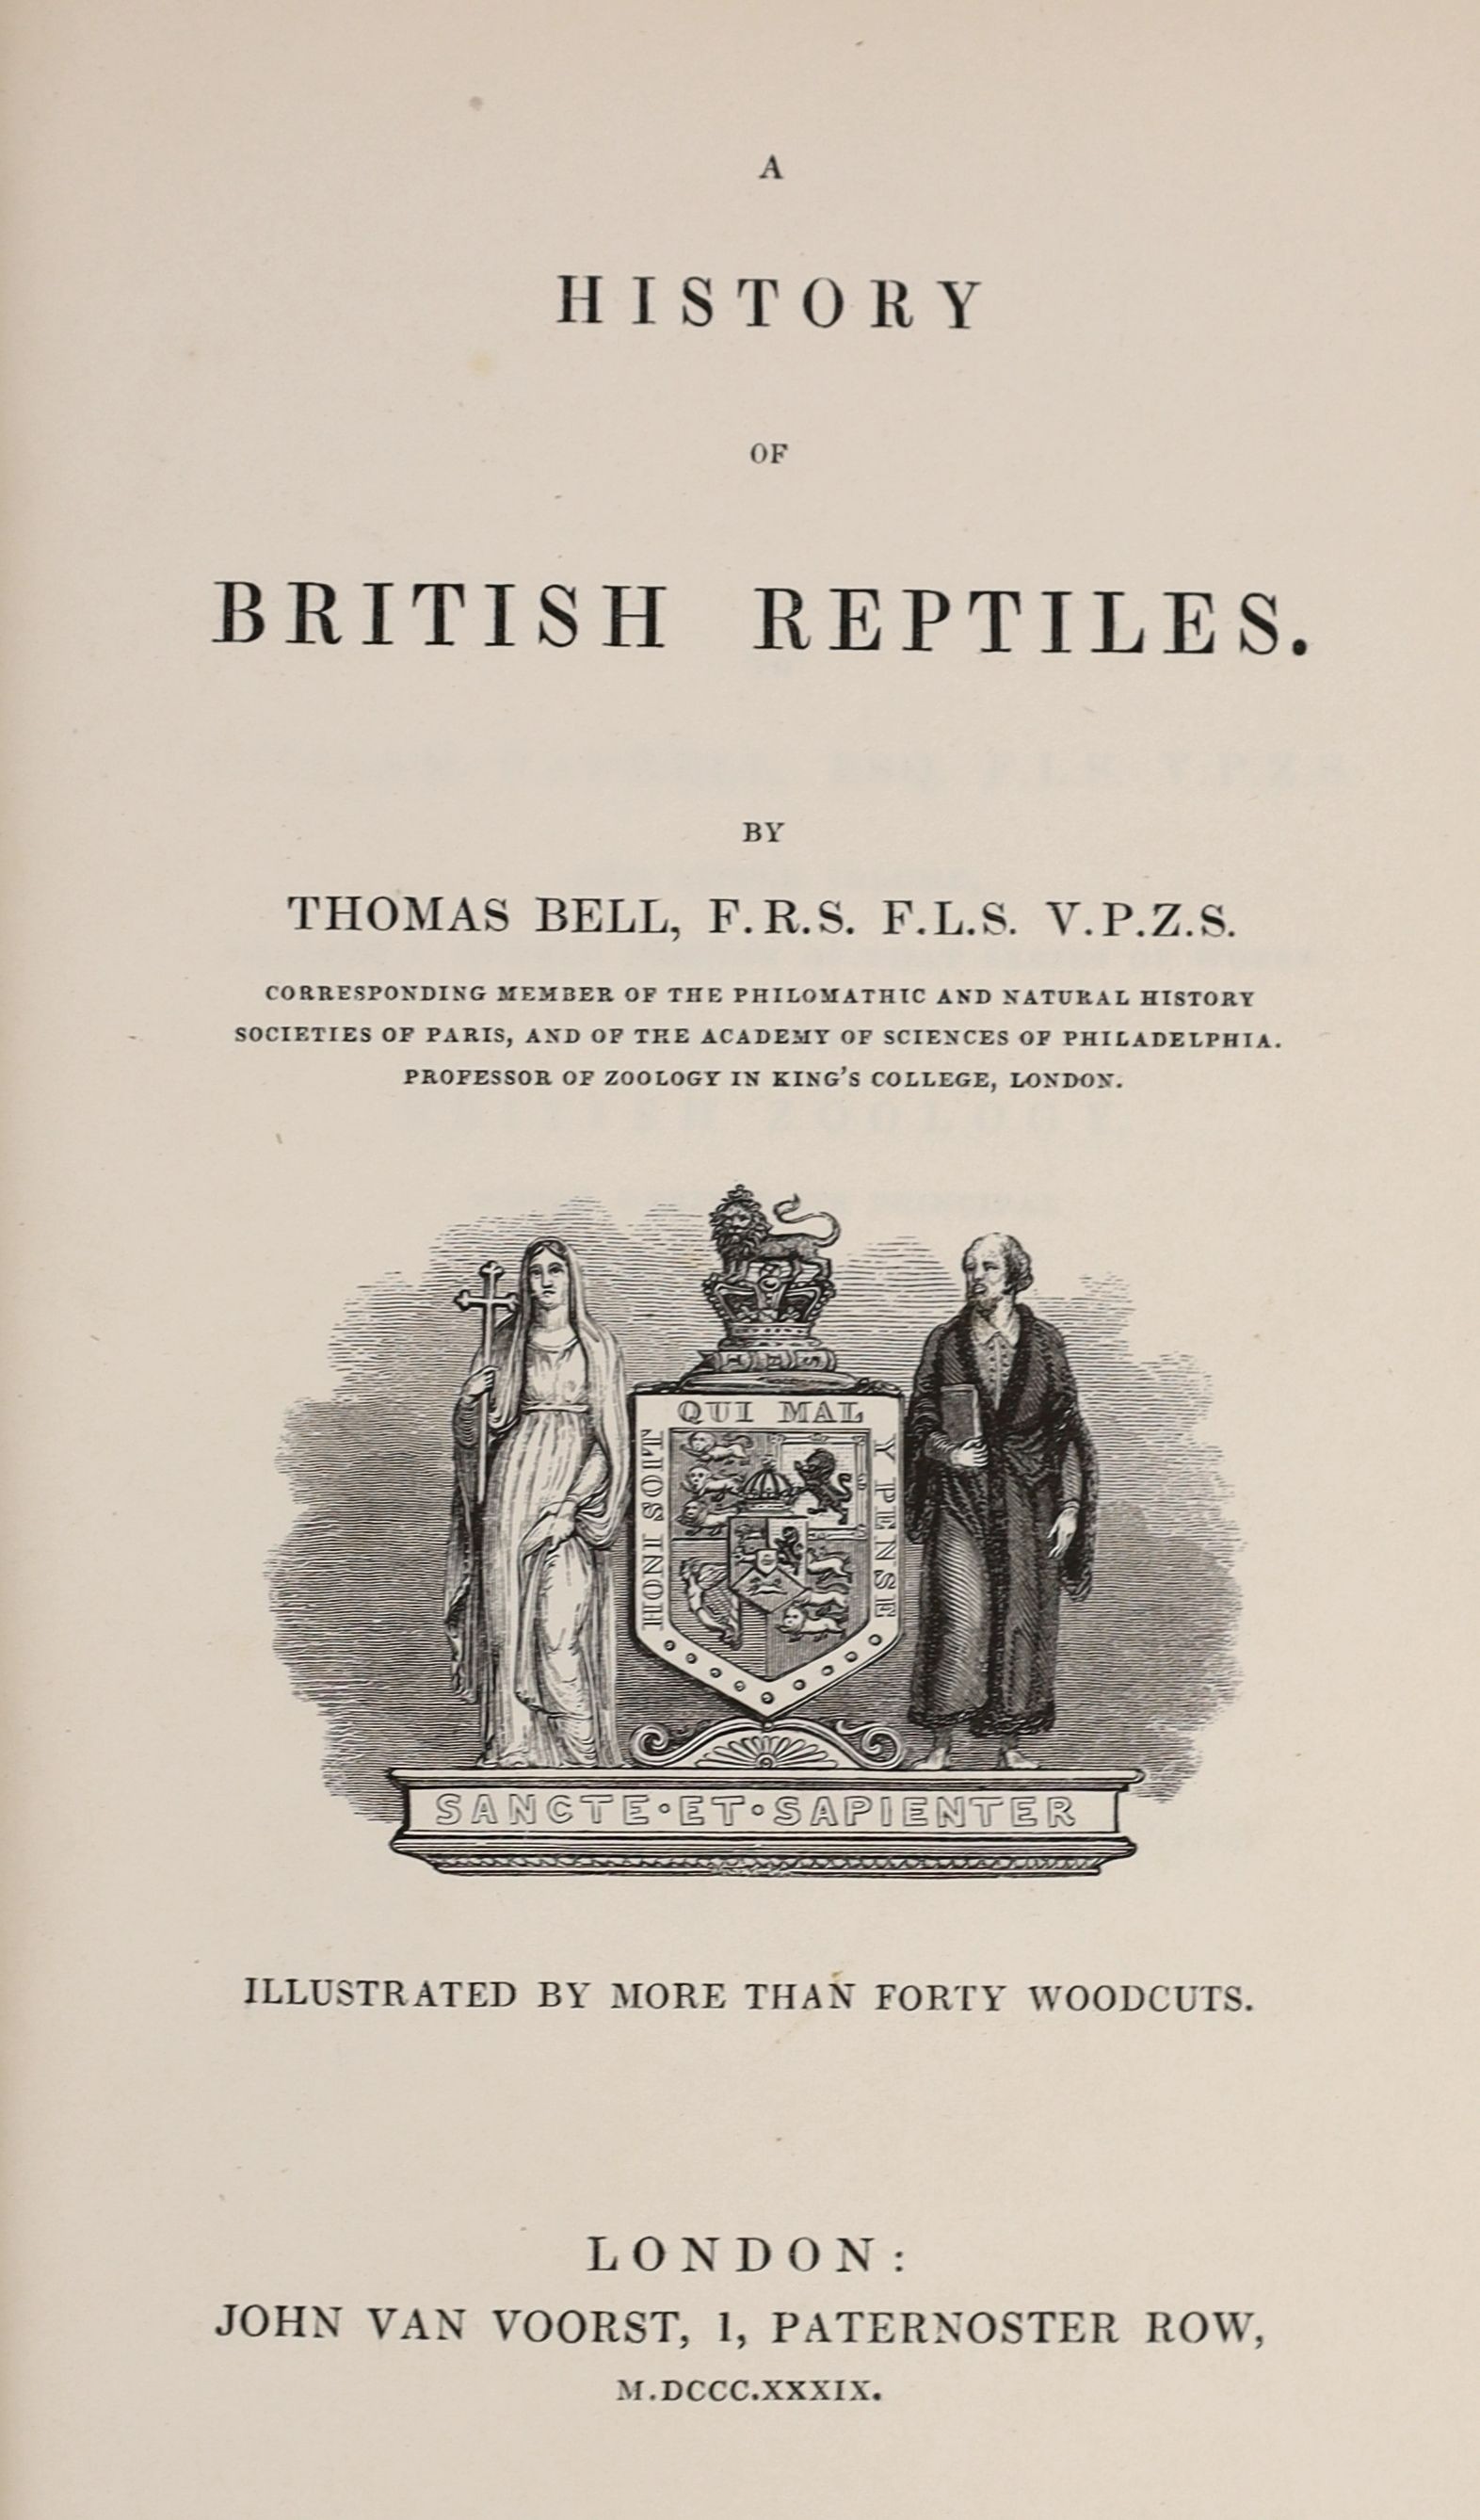 Bell, Thomas - A History of British Quadrupeds, including the Cetacea, 8vo, calf, John van Voorst, London, 1837 and A History of British Reptiles, 8vo, uniformly bound, John van Voorst, London, 1839 (2)